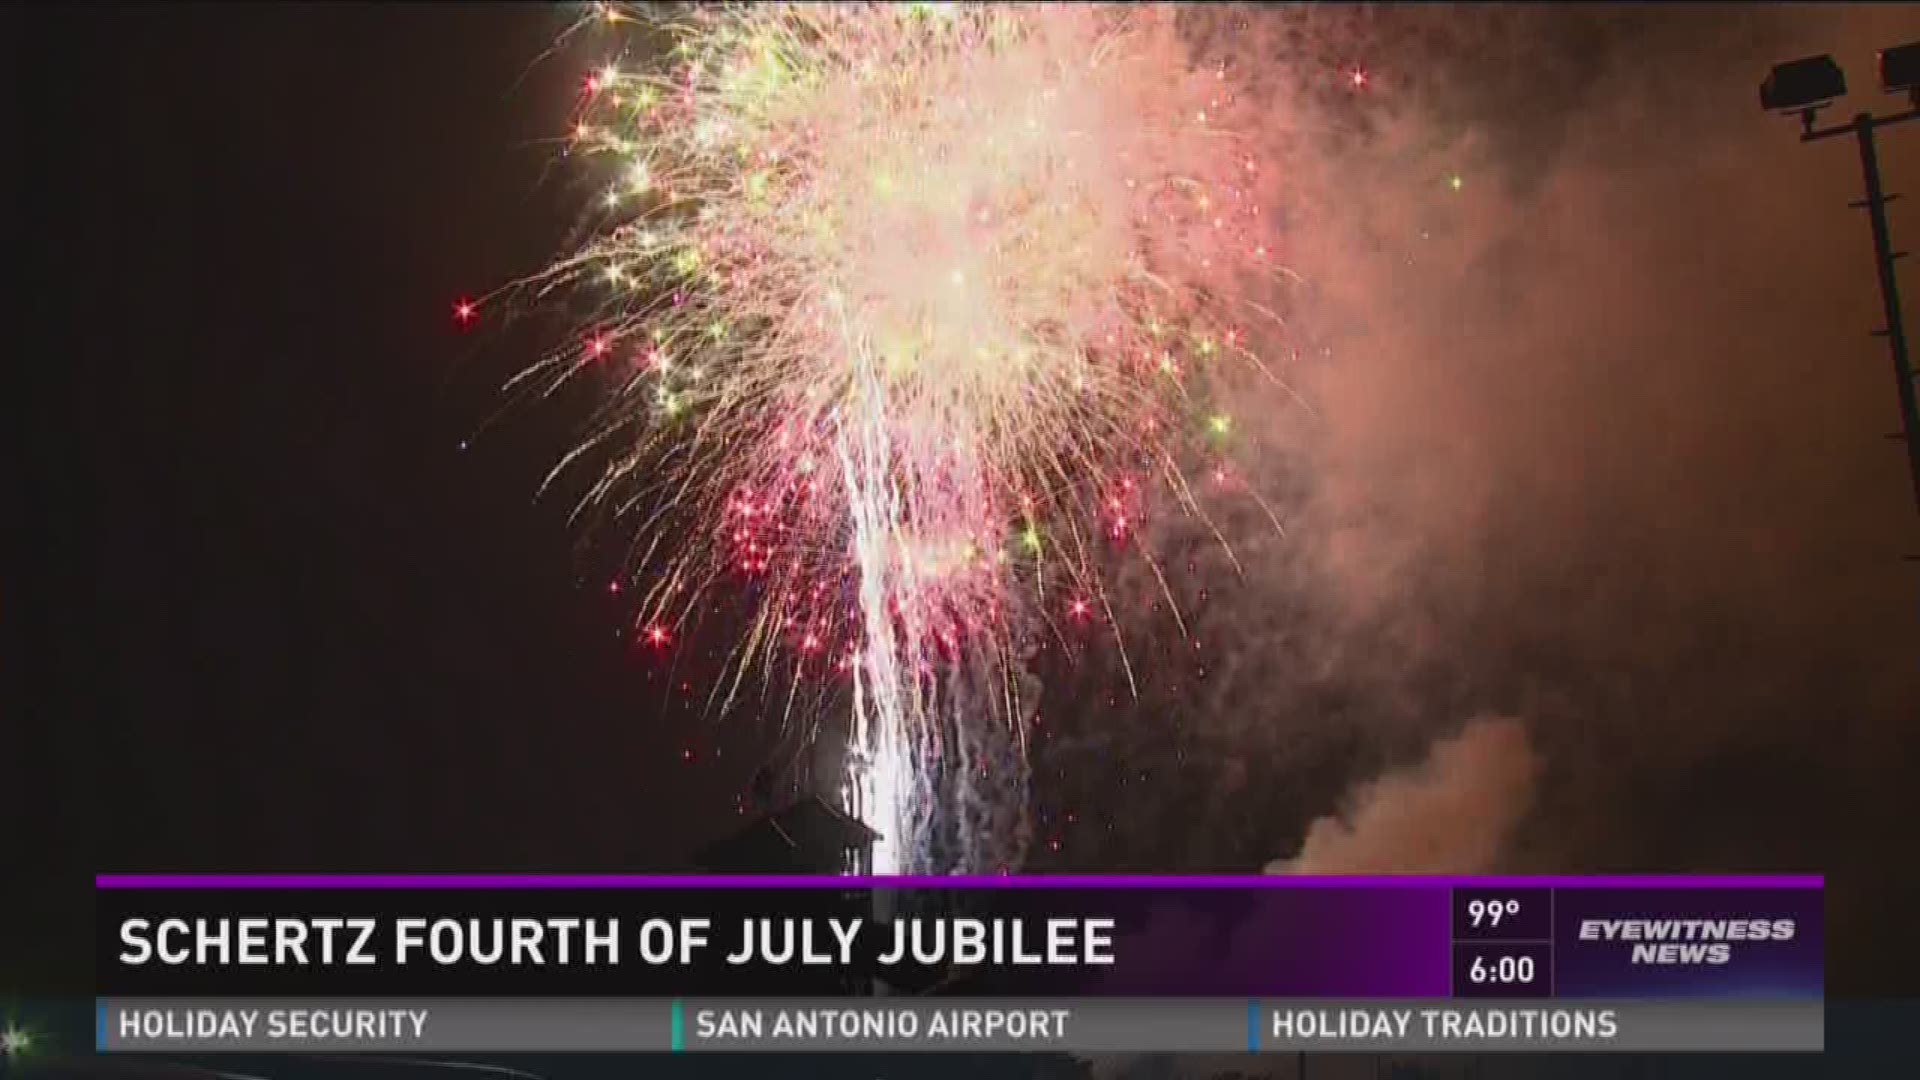 Fourth of July Jubilee in Schertz ready for big fireworks